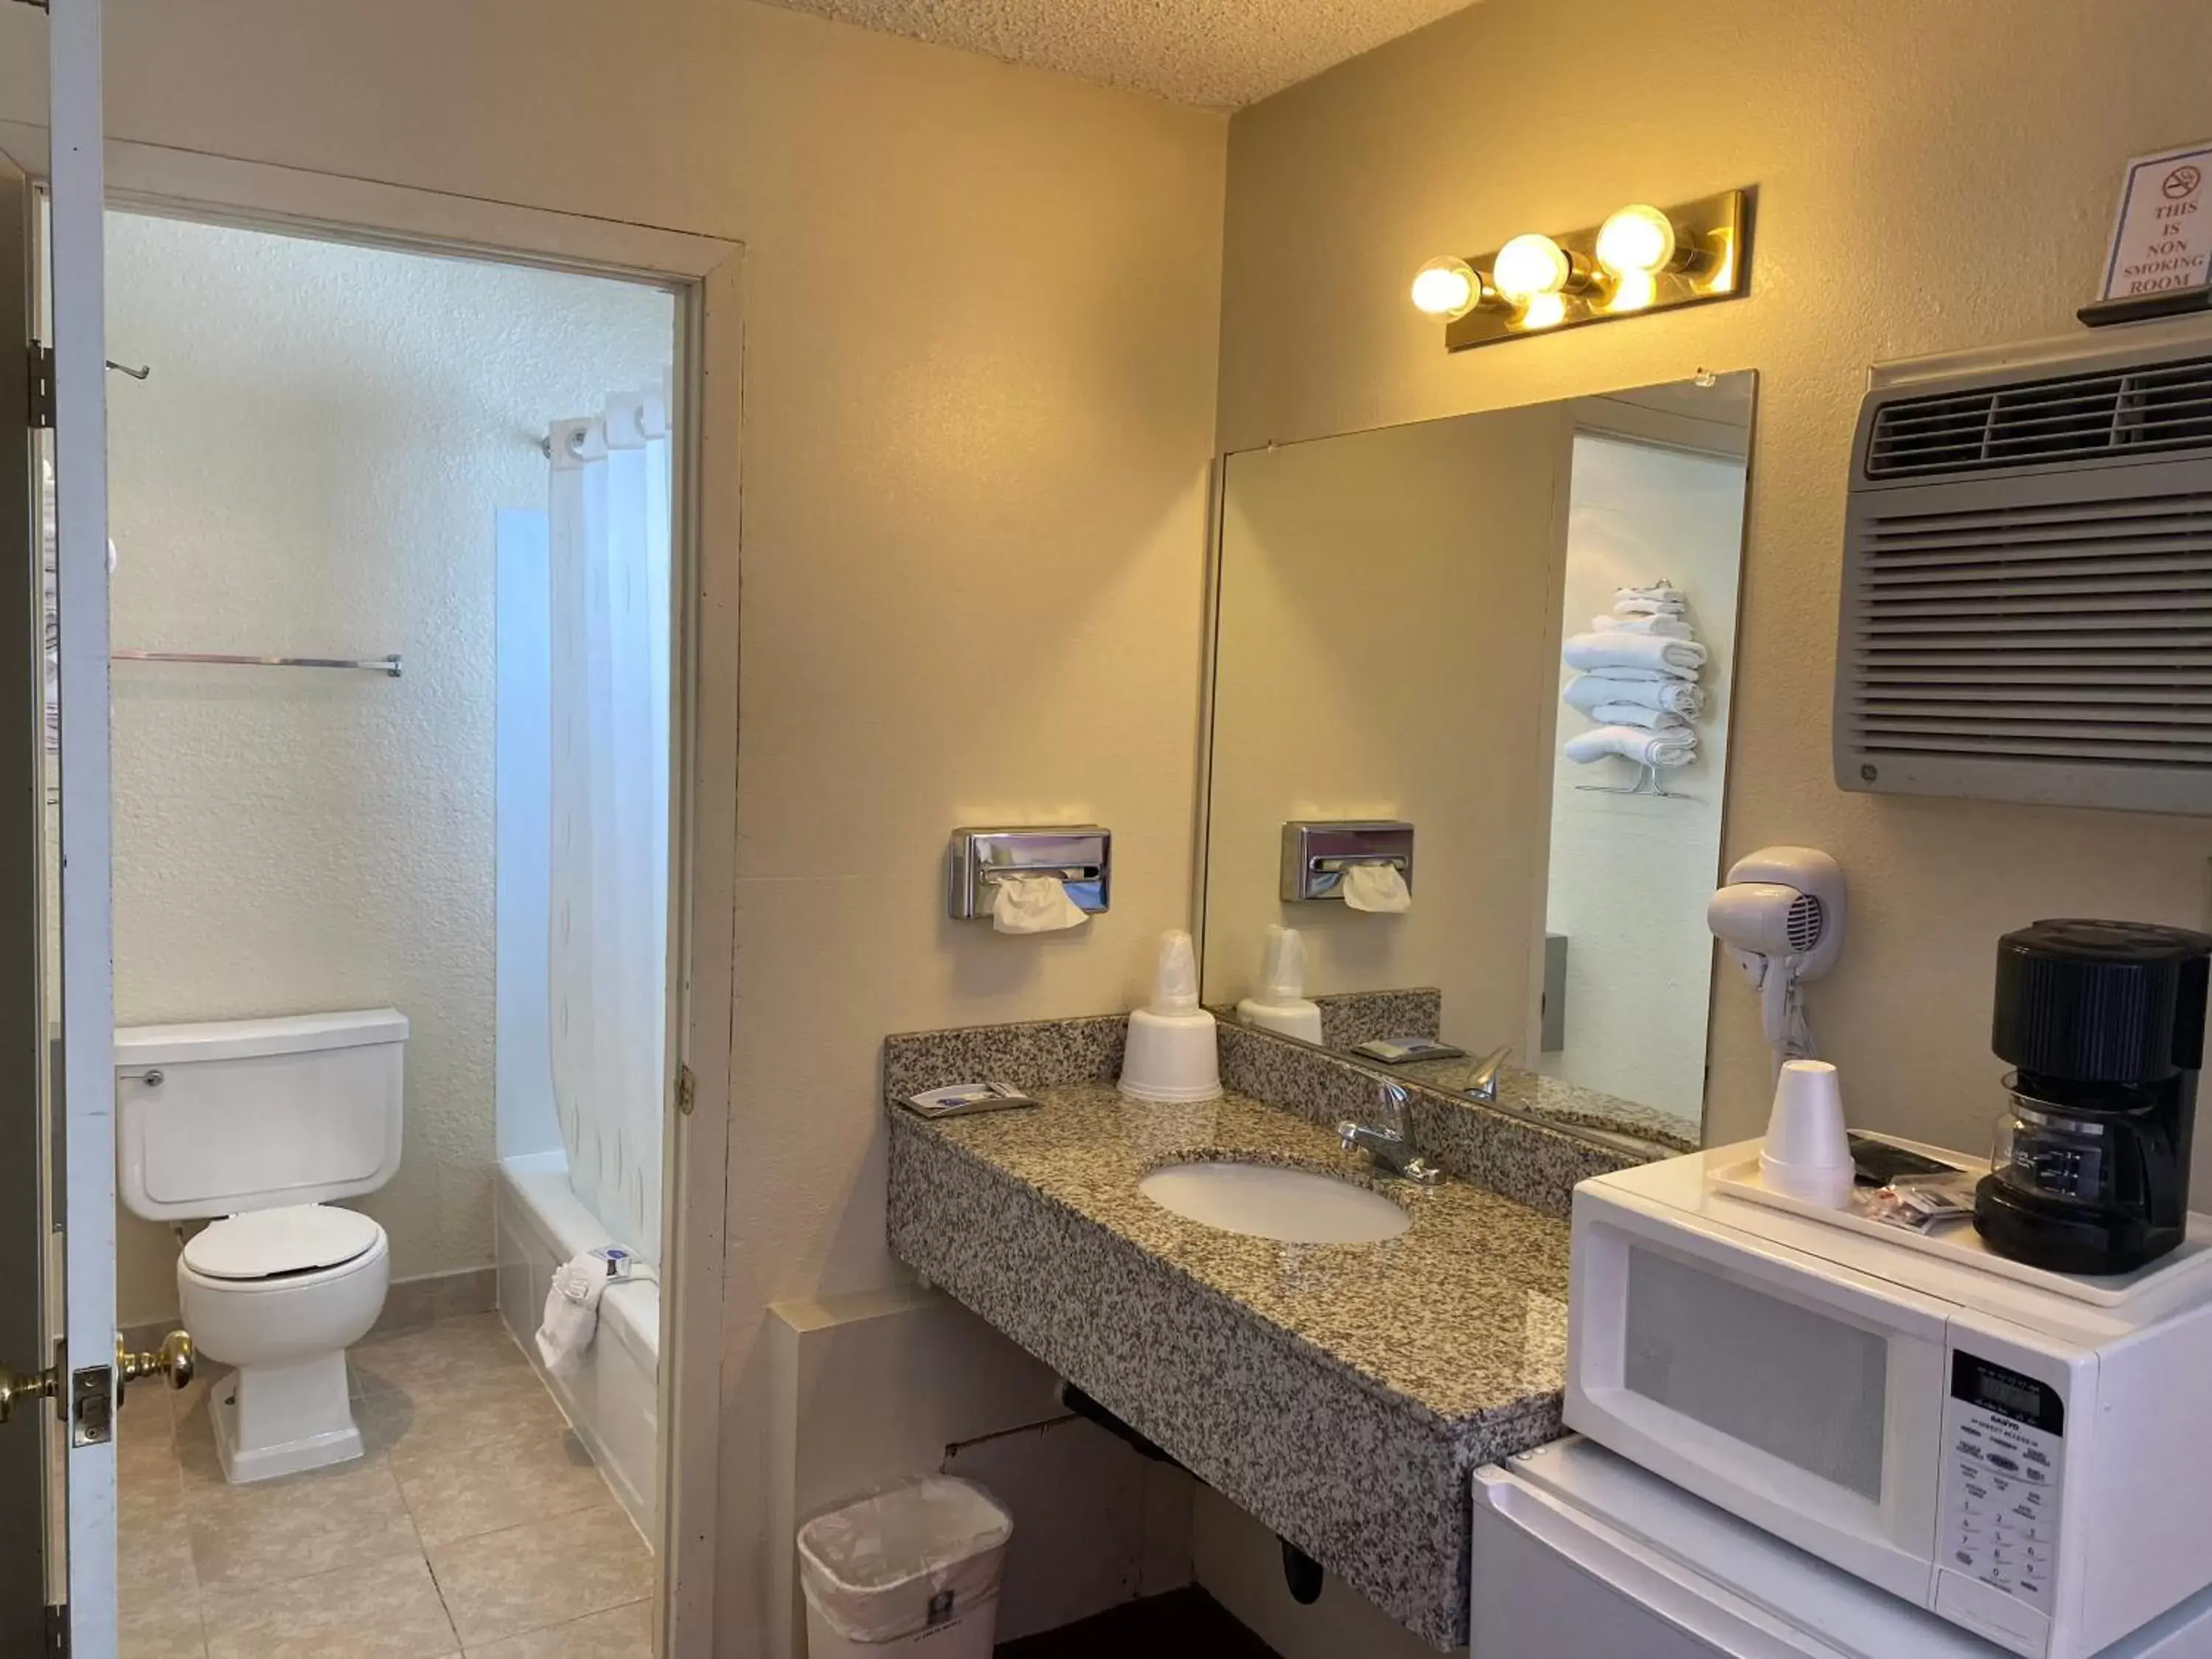 Bathroom in Budget Inn Las Vegas New Mexico